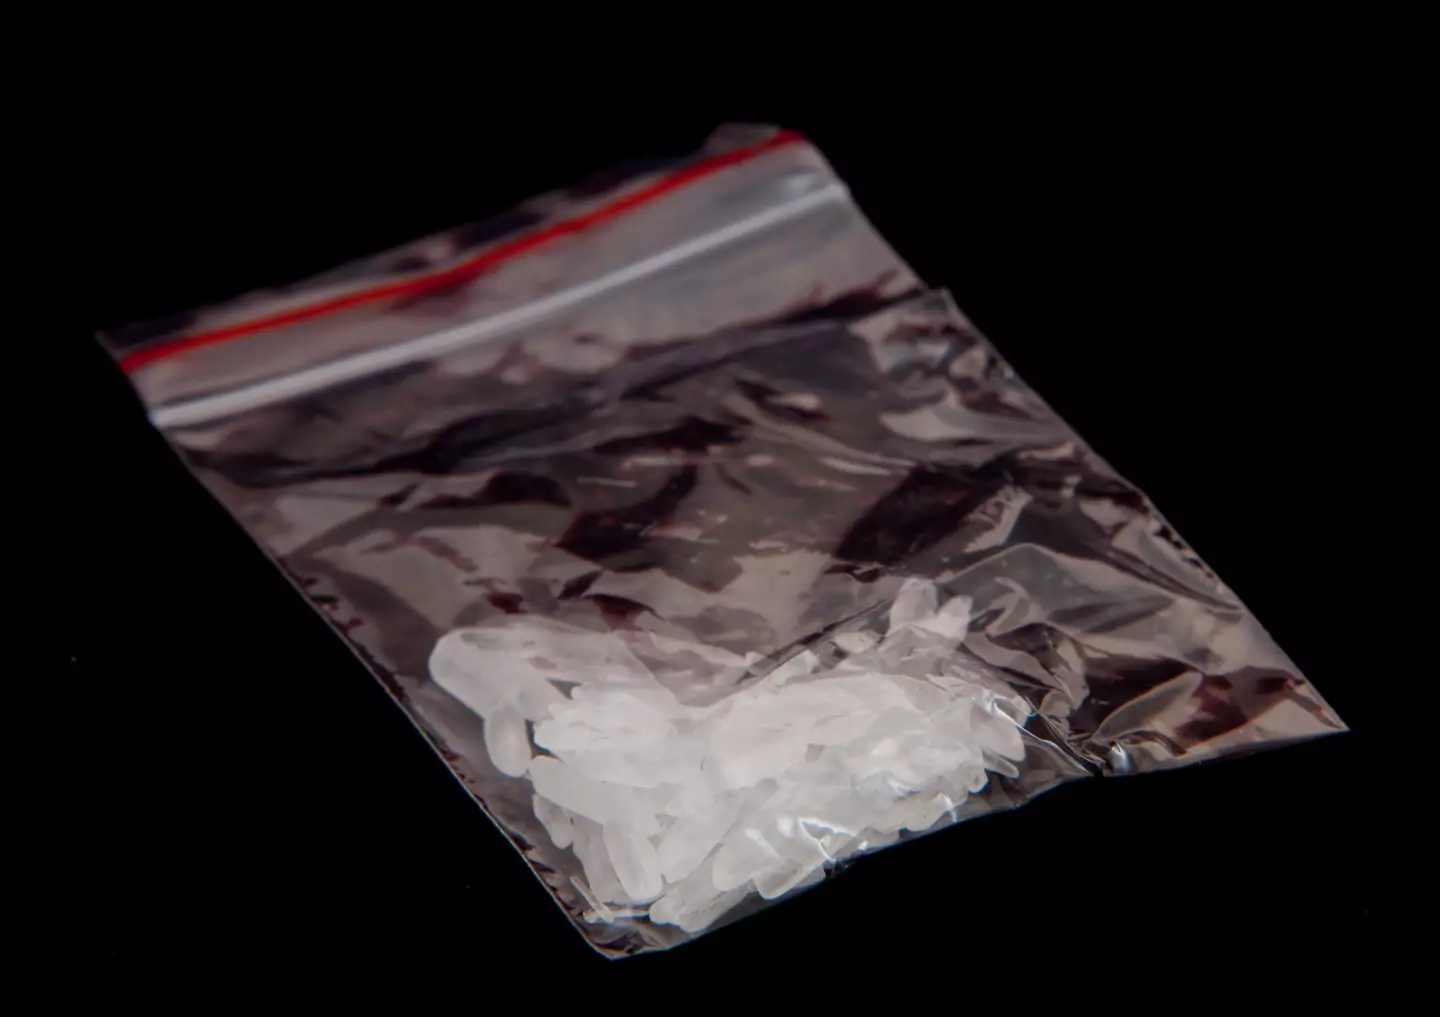 Huge quantities of methamphetamine were discovered.